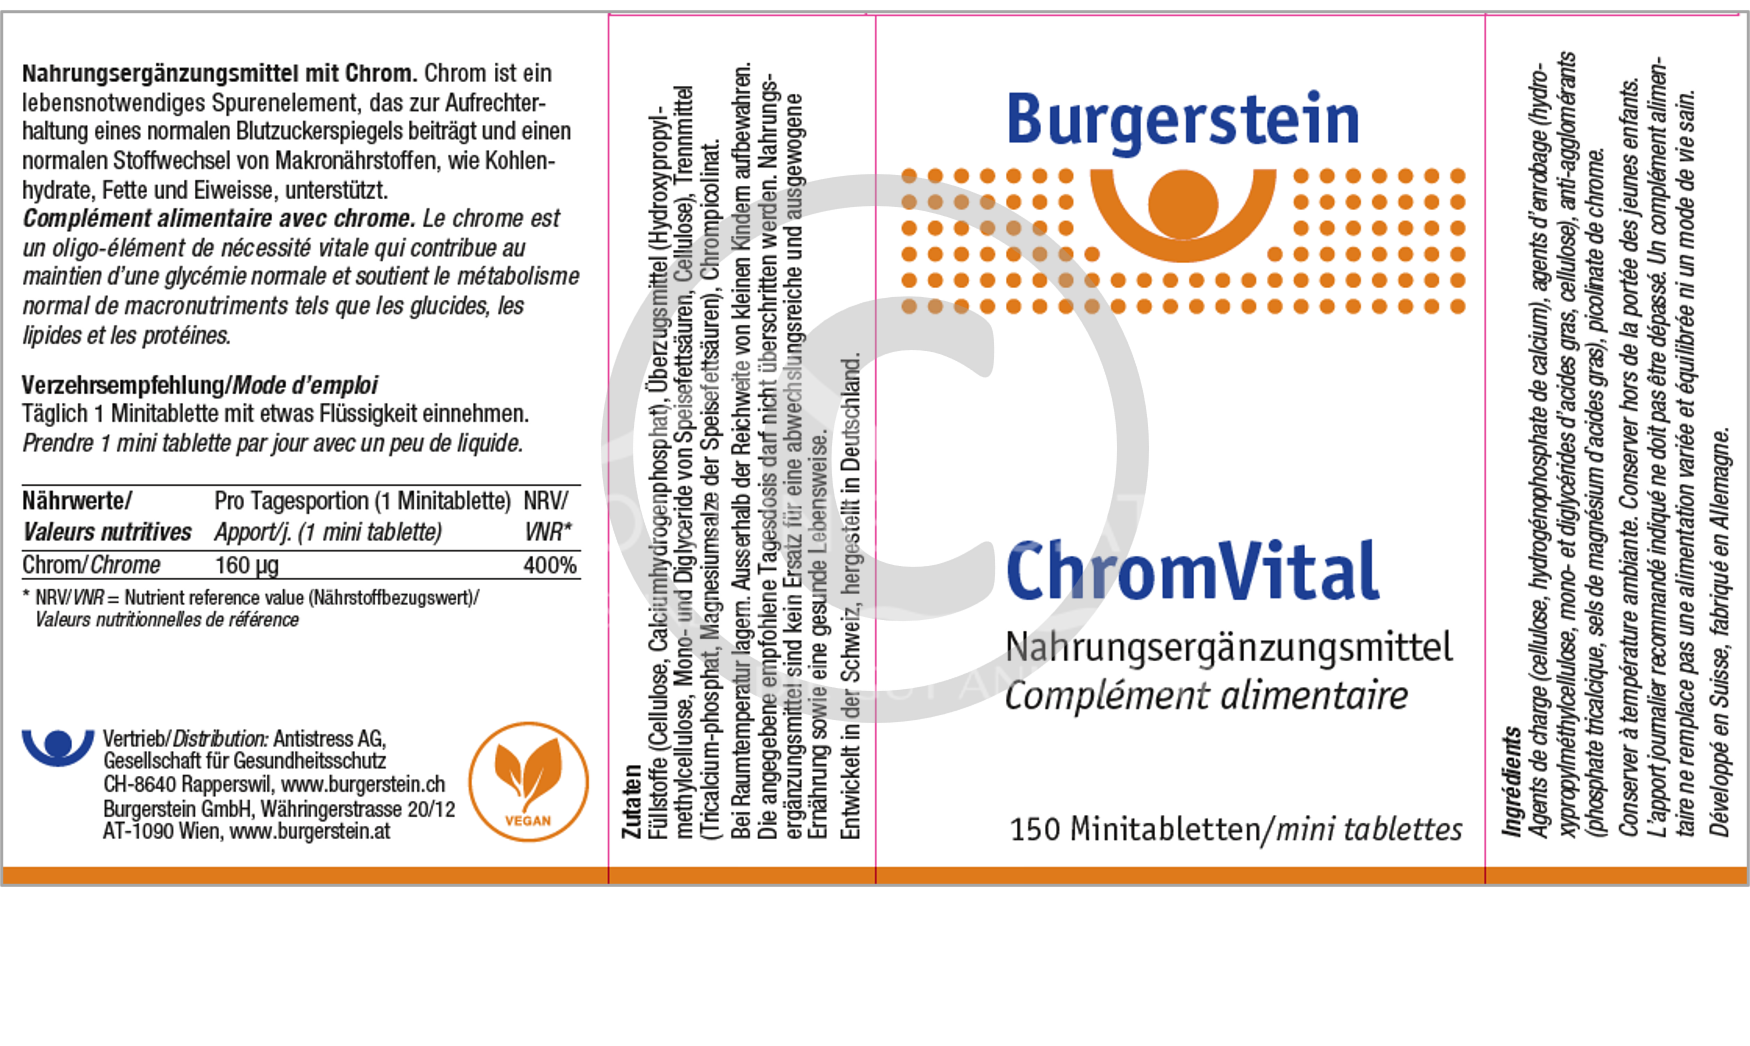 Burgerstein ChromVital Minitabletten